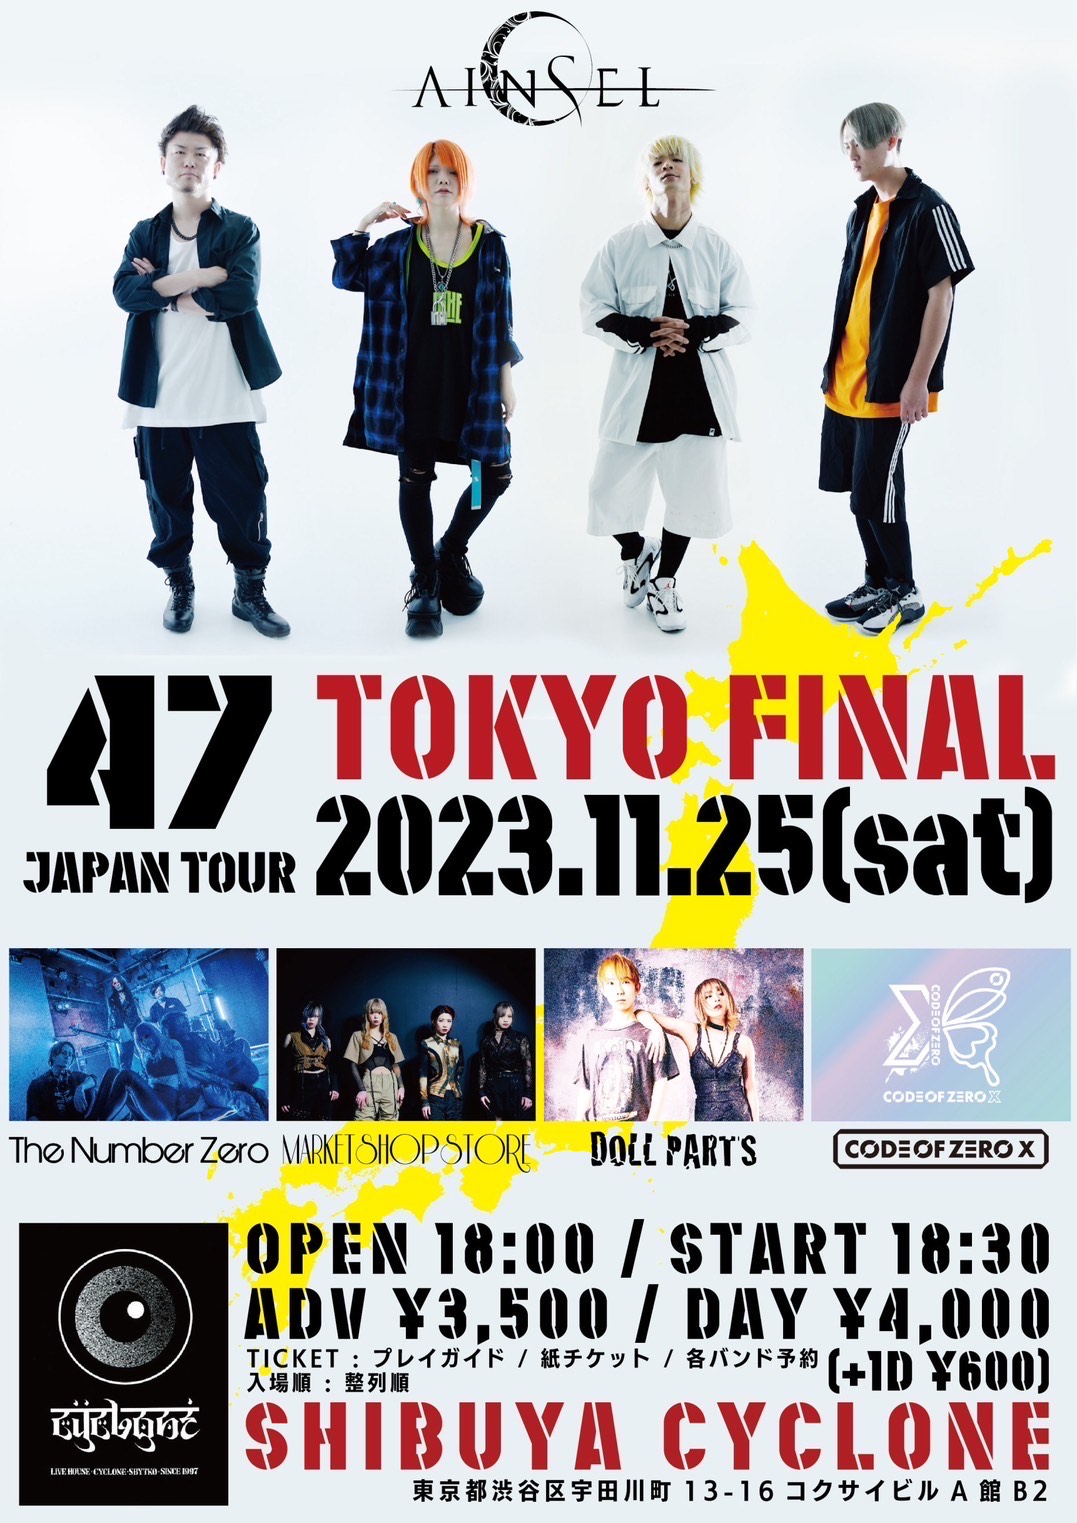 AINSEL 47JAPAN TOUR TOKYO FINAL